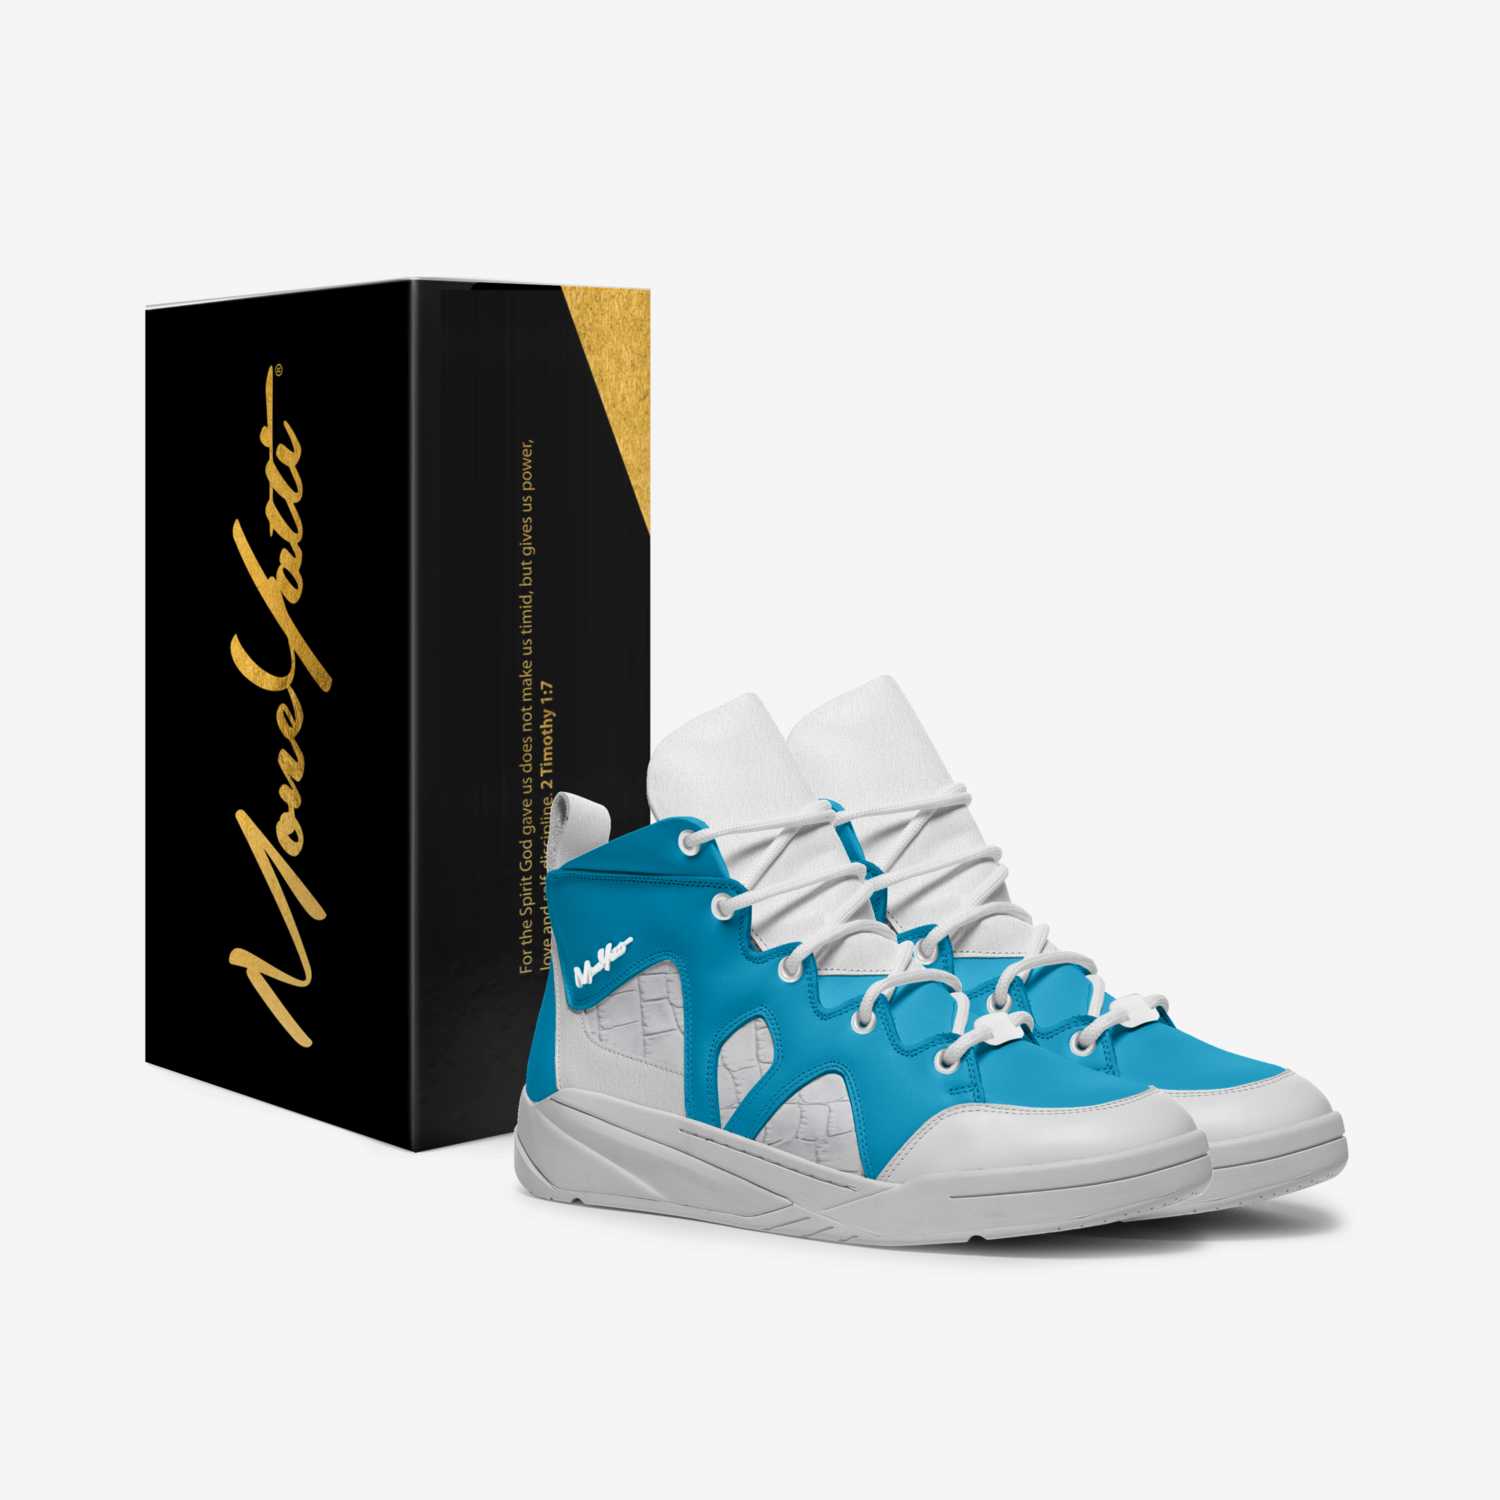 MONEYATTI TAKEOFF 012 custom made in Italy shoes by Moneyatti Brand | Box view